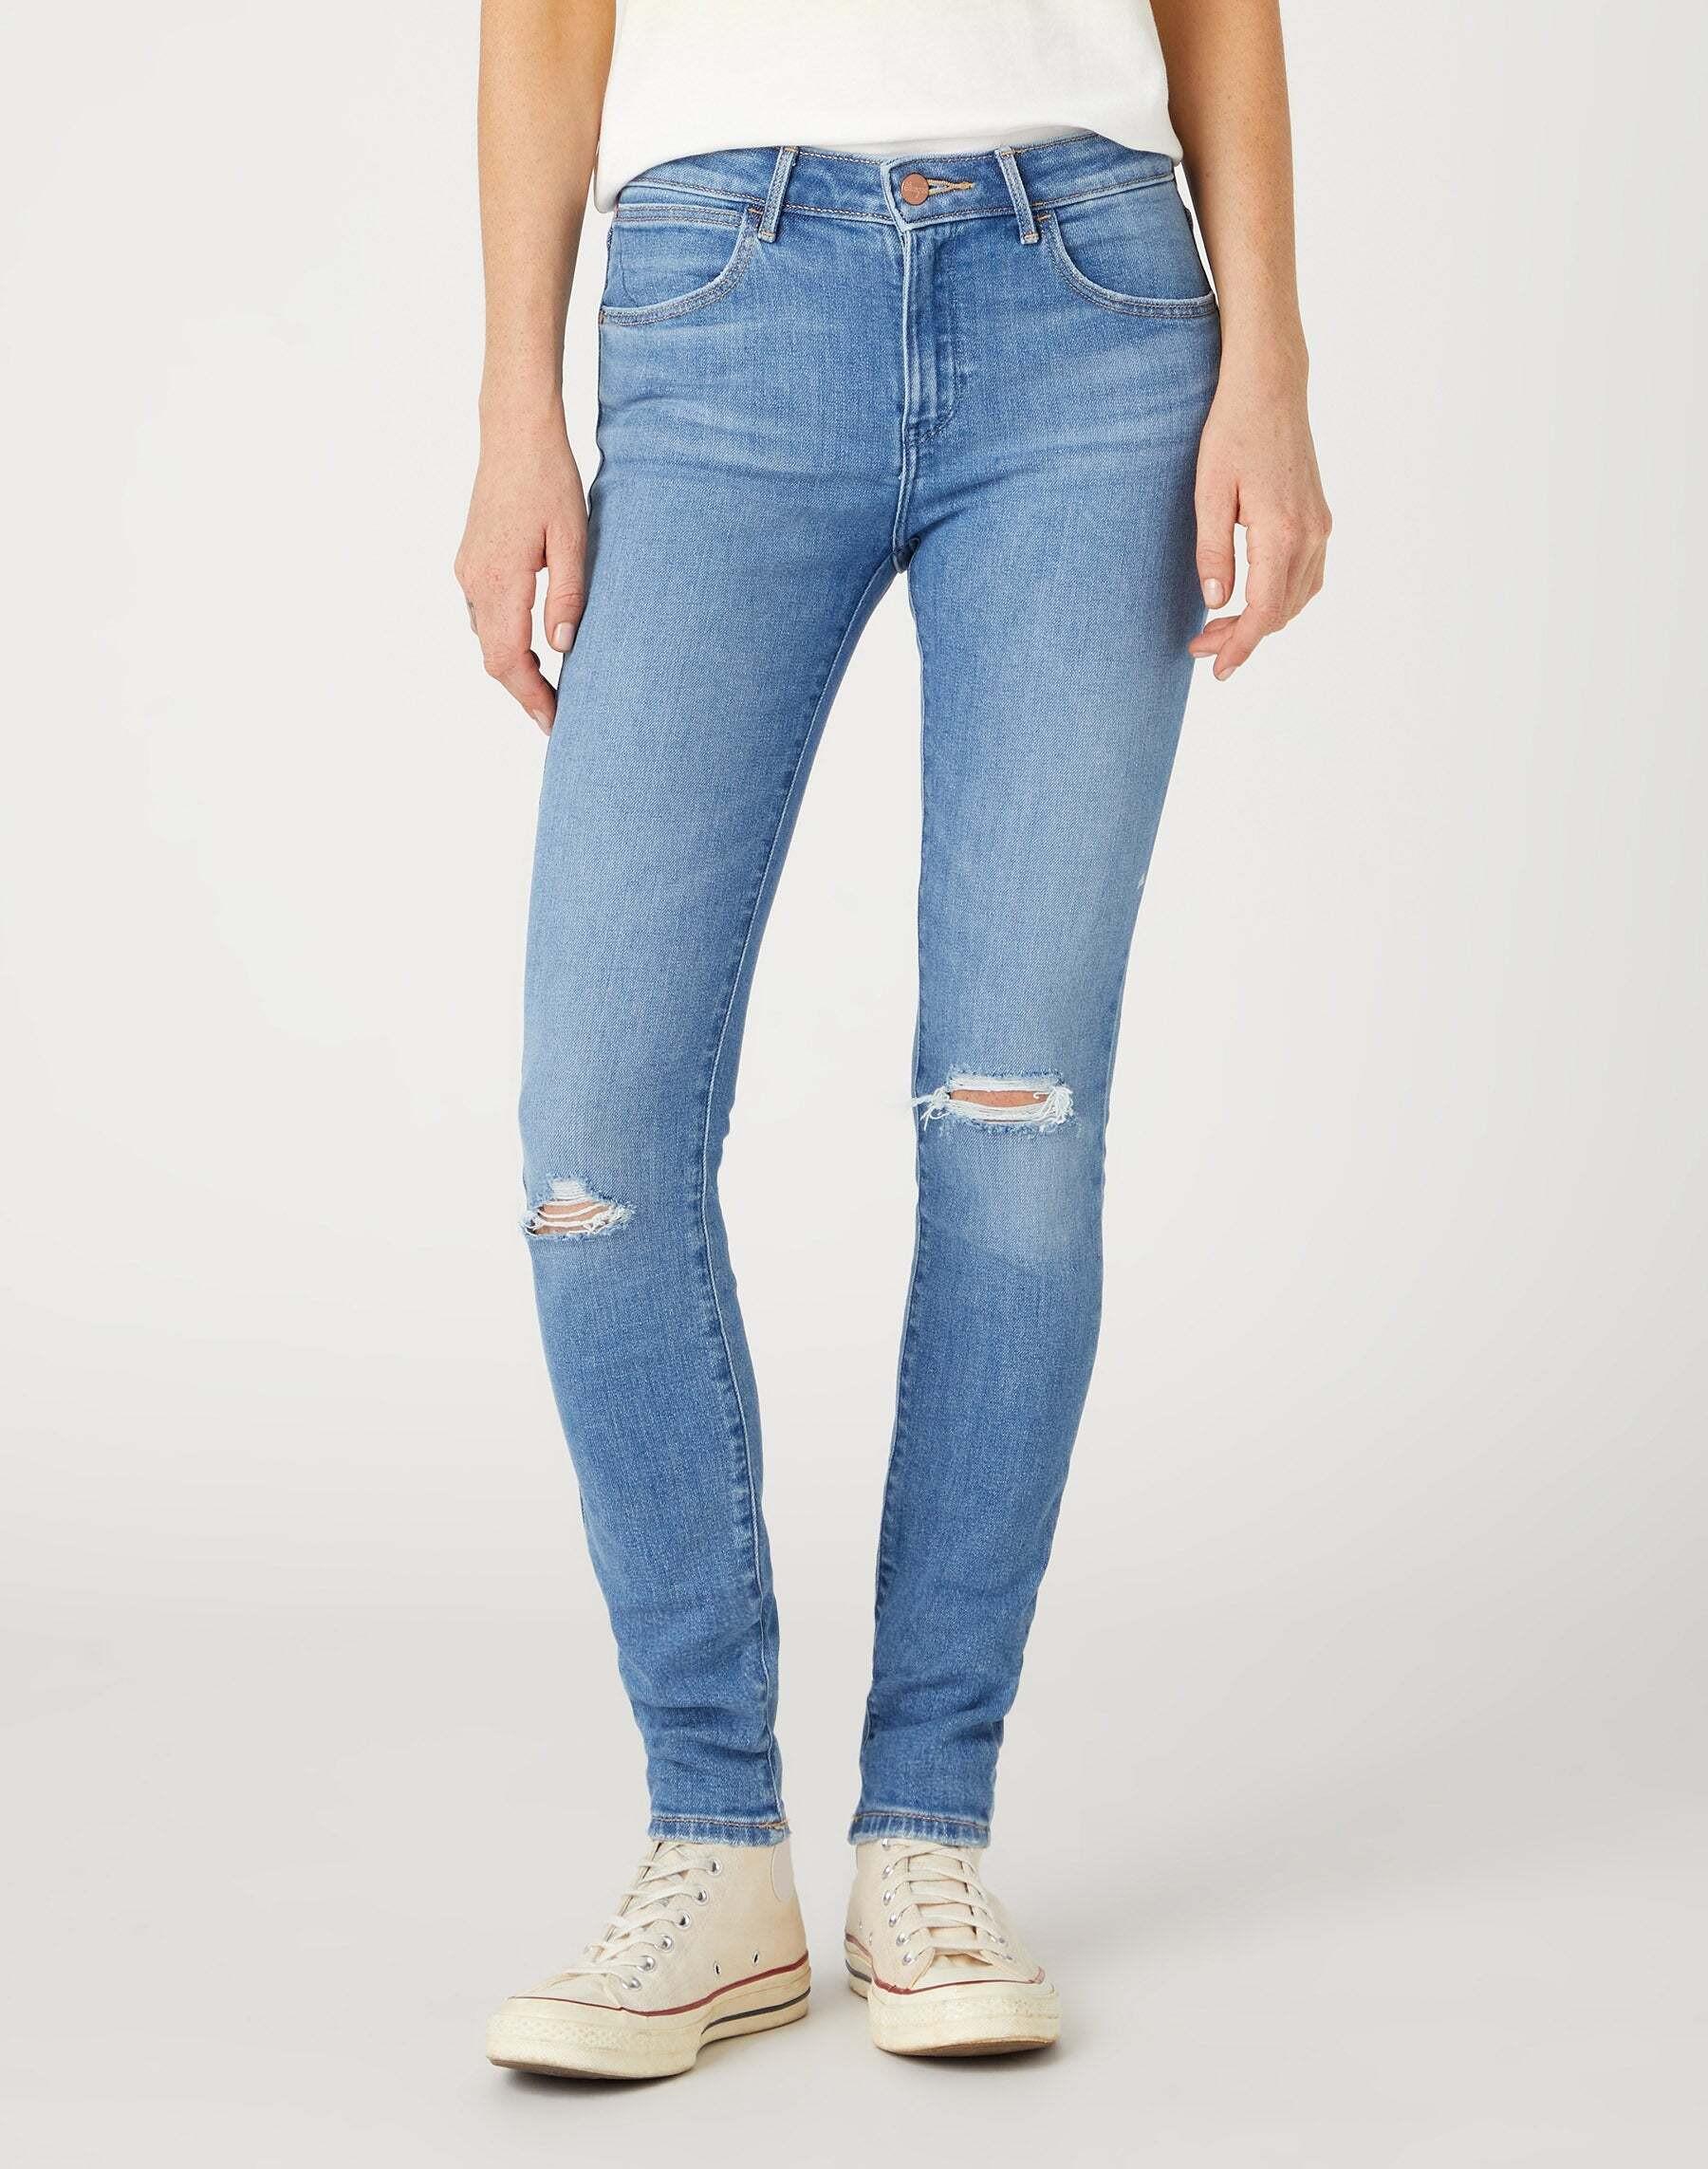 Jeans Skinny Damen Blau L30/W30 von Wrangler